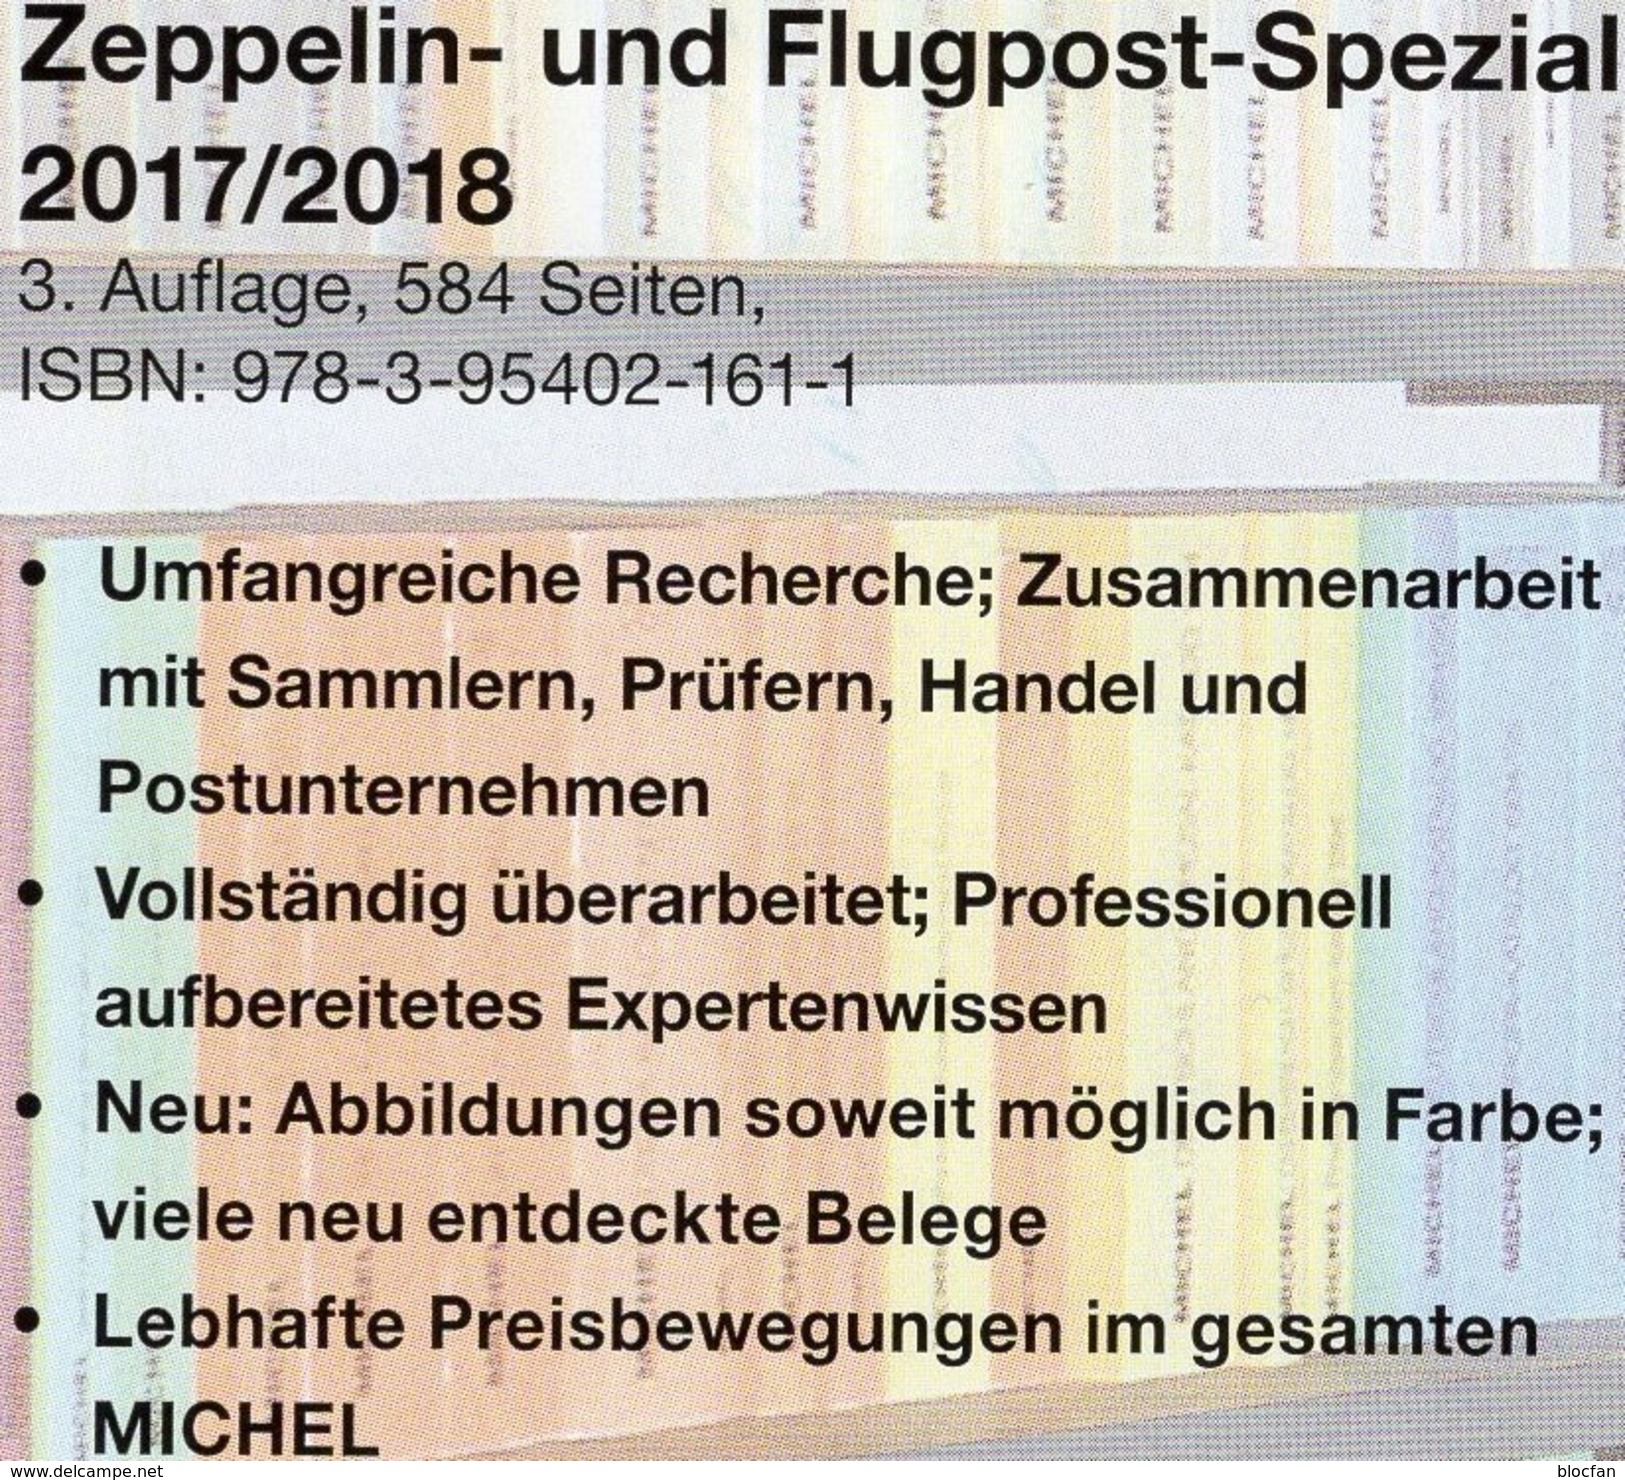 Spezial Michel Zeppelin-/Flugpost Katalog 2017/2018 neu 89&euro; mit Flugpost in alle WELT topics catalogue of the world